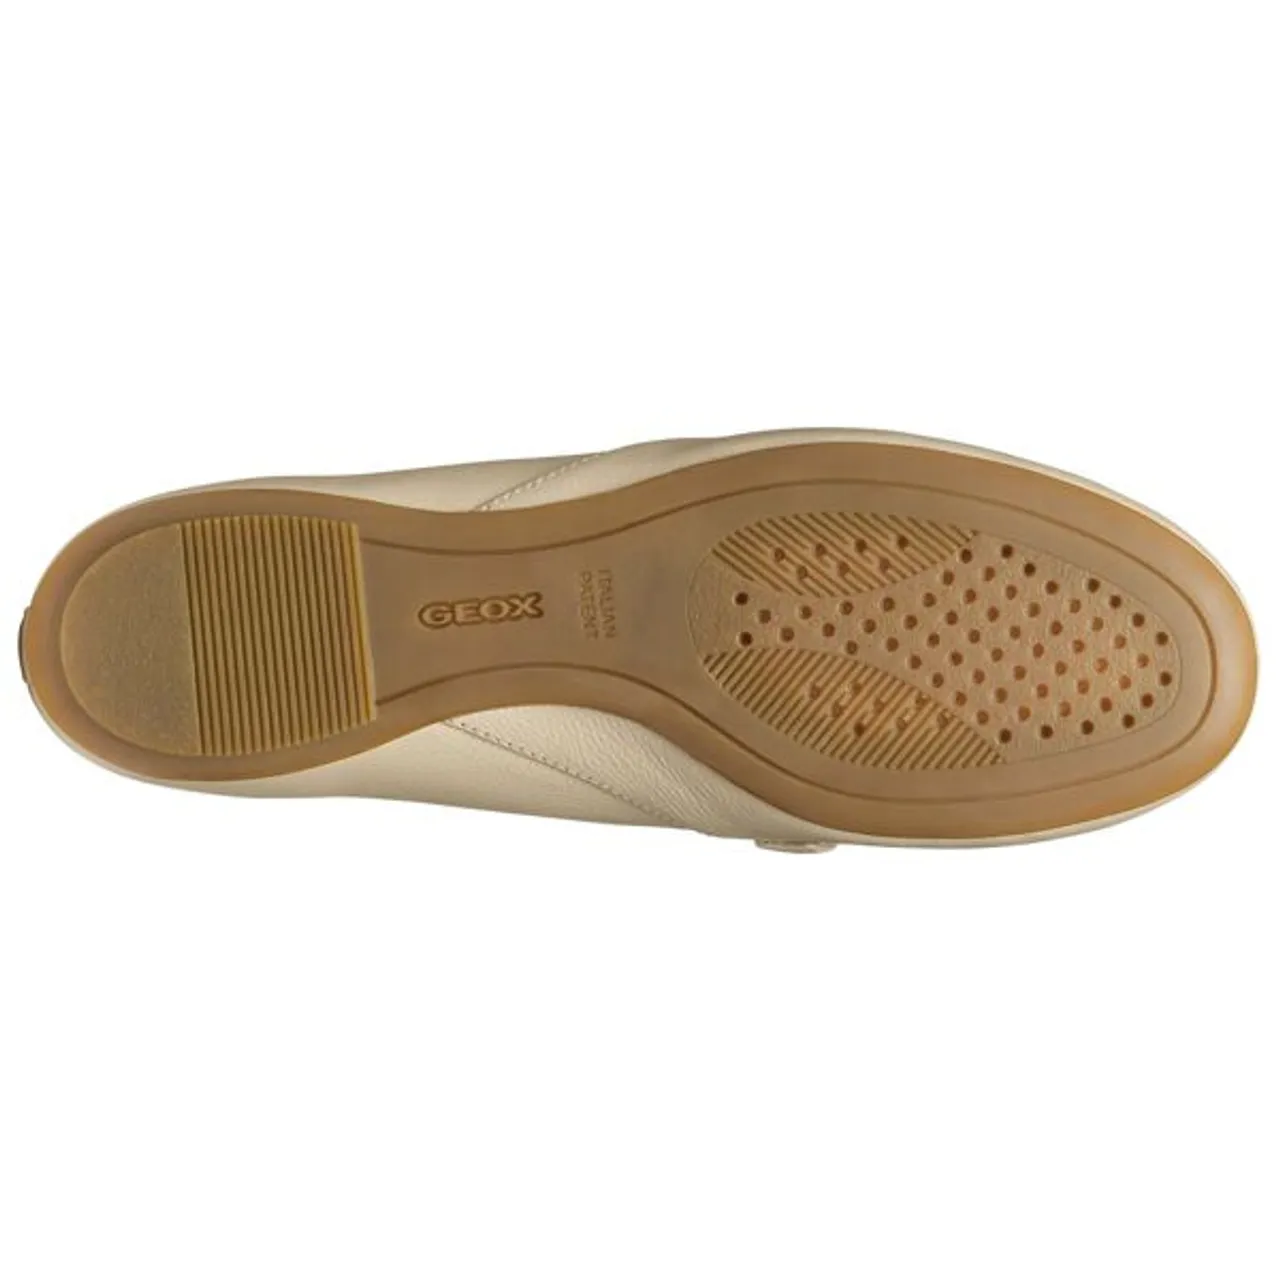 Loafer GEOX "D PALMARIA J" Gr. 37, beige (sandfarben) Damen Schuhe Slip ons